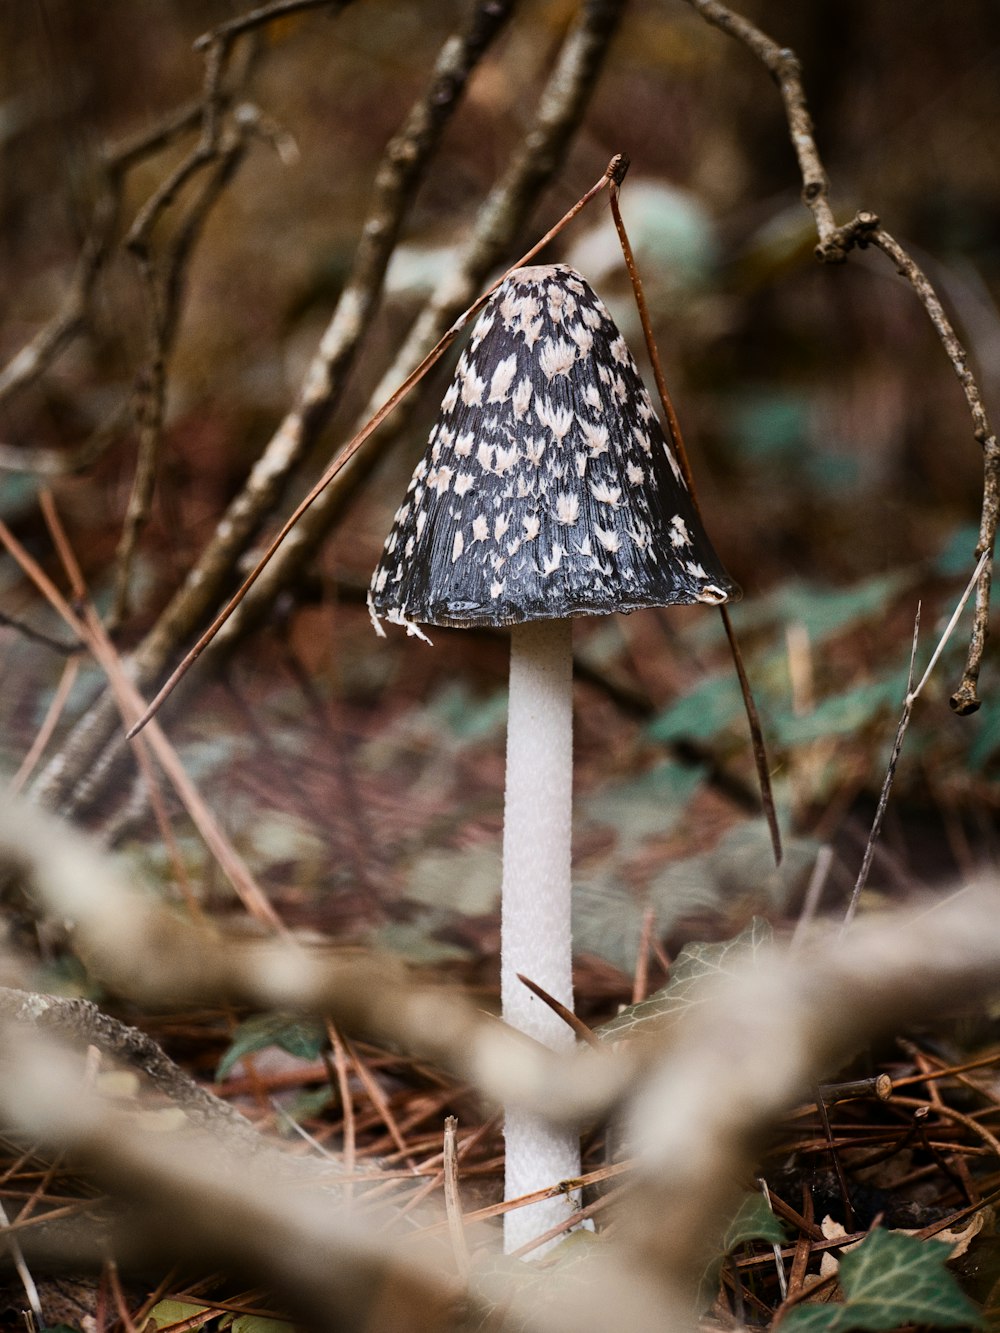 a mushroom growing in a tree